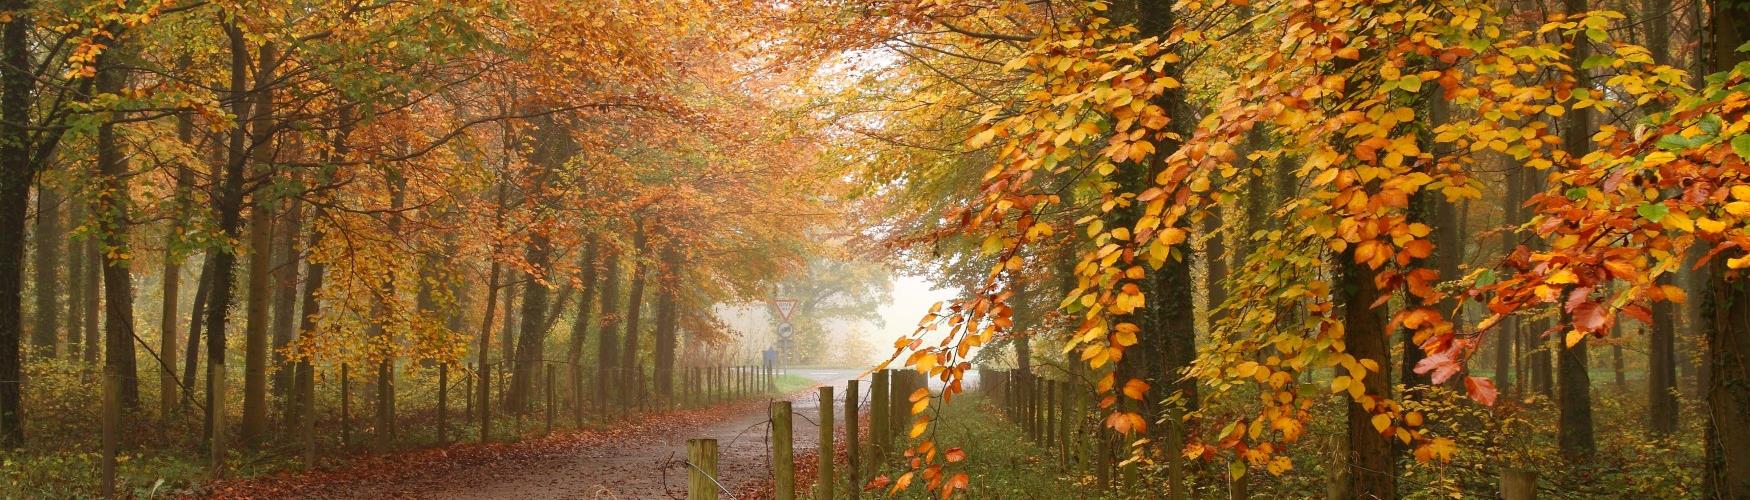 Hailey Wood in the Autumn